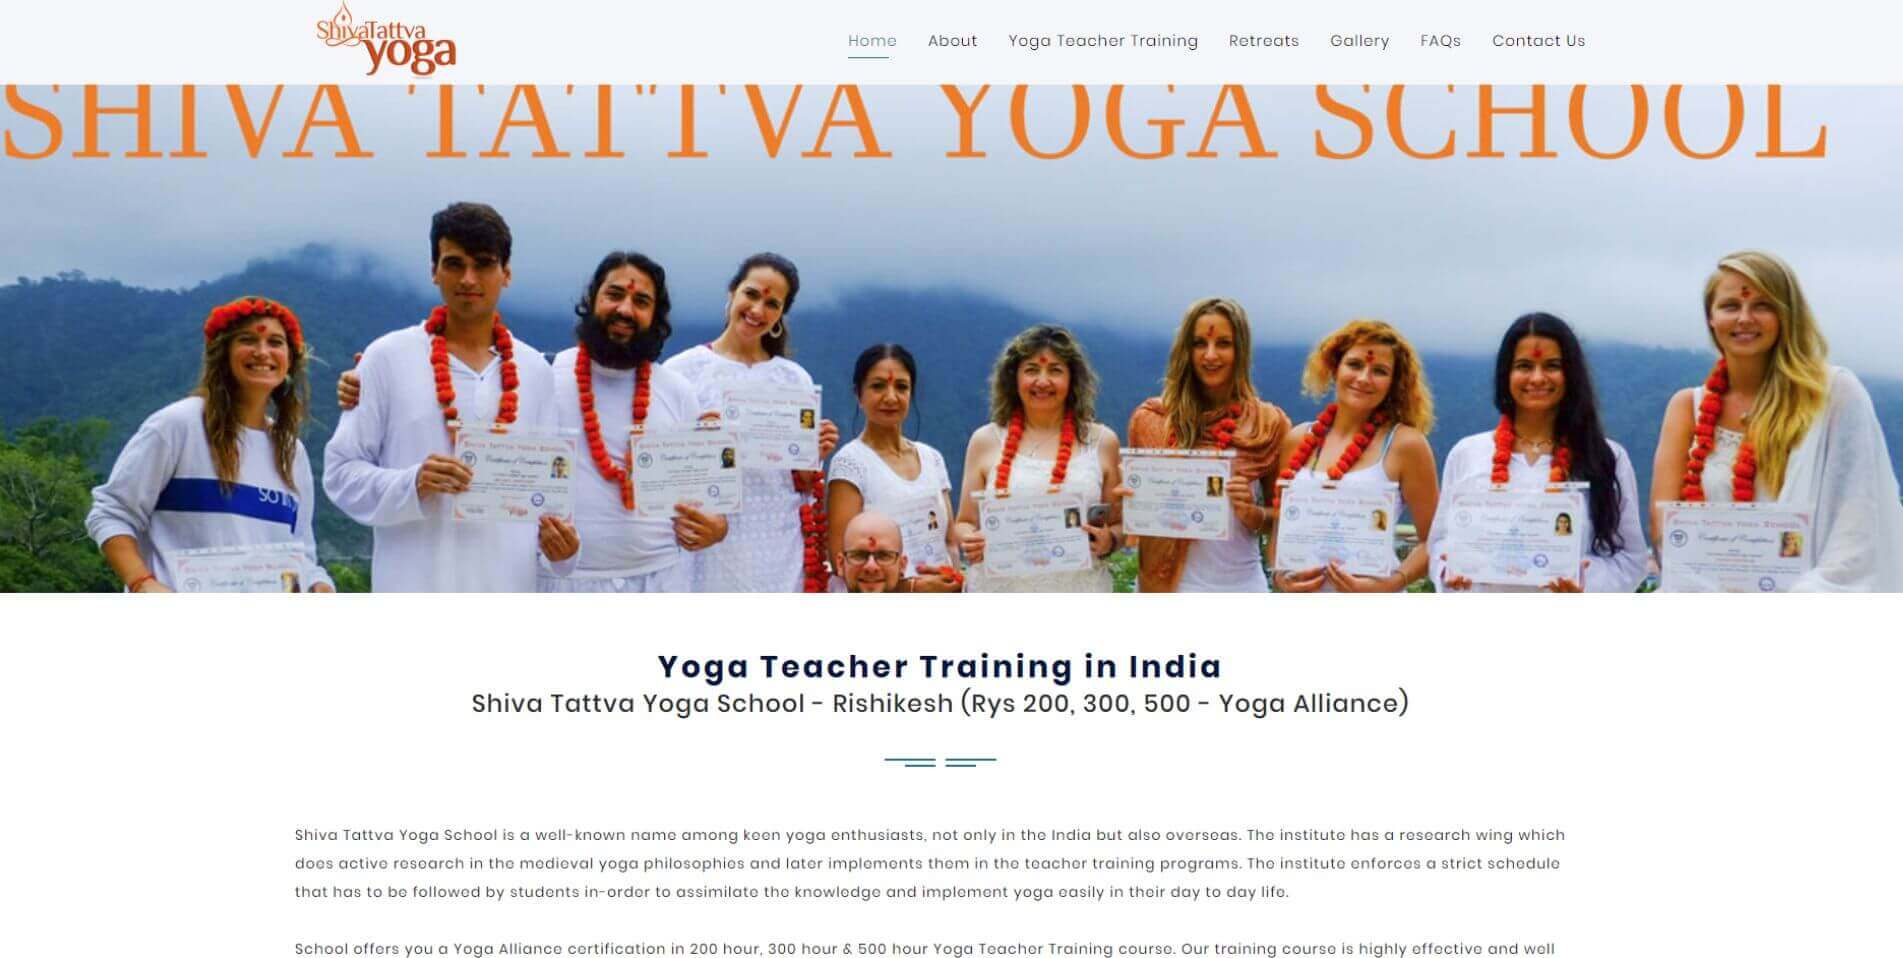 Shiva Tattva Yoga